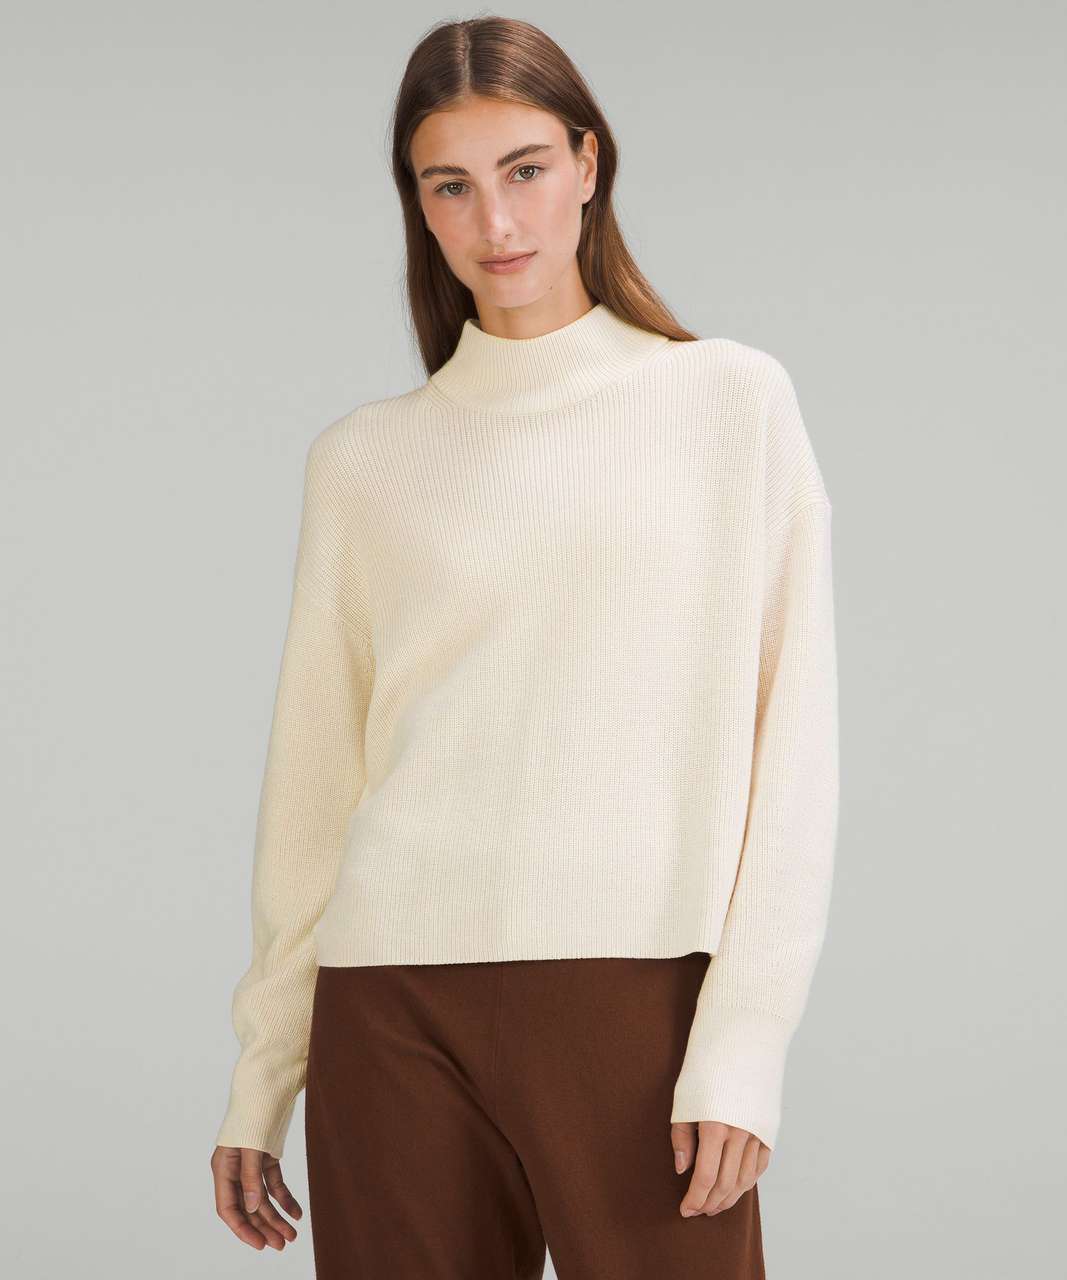 Lululemon Merino Wool-Blend Ribbed Turtleneck Sweater - Heathered